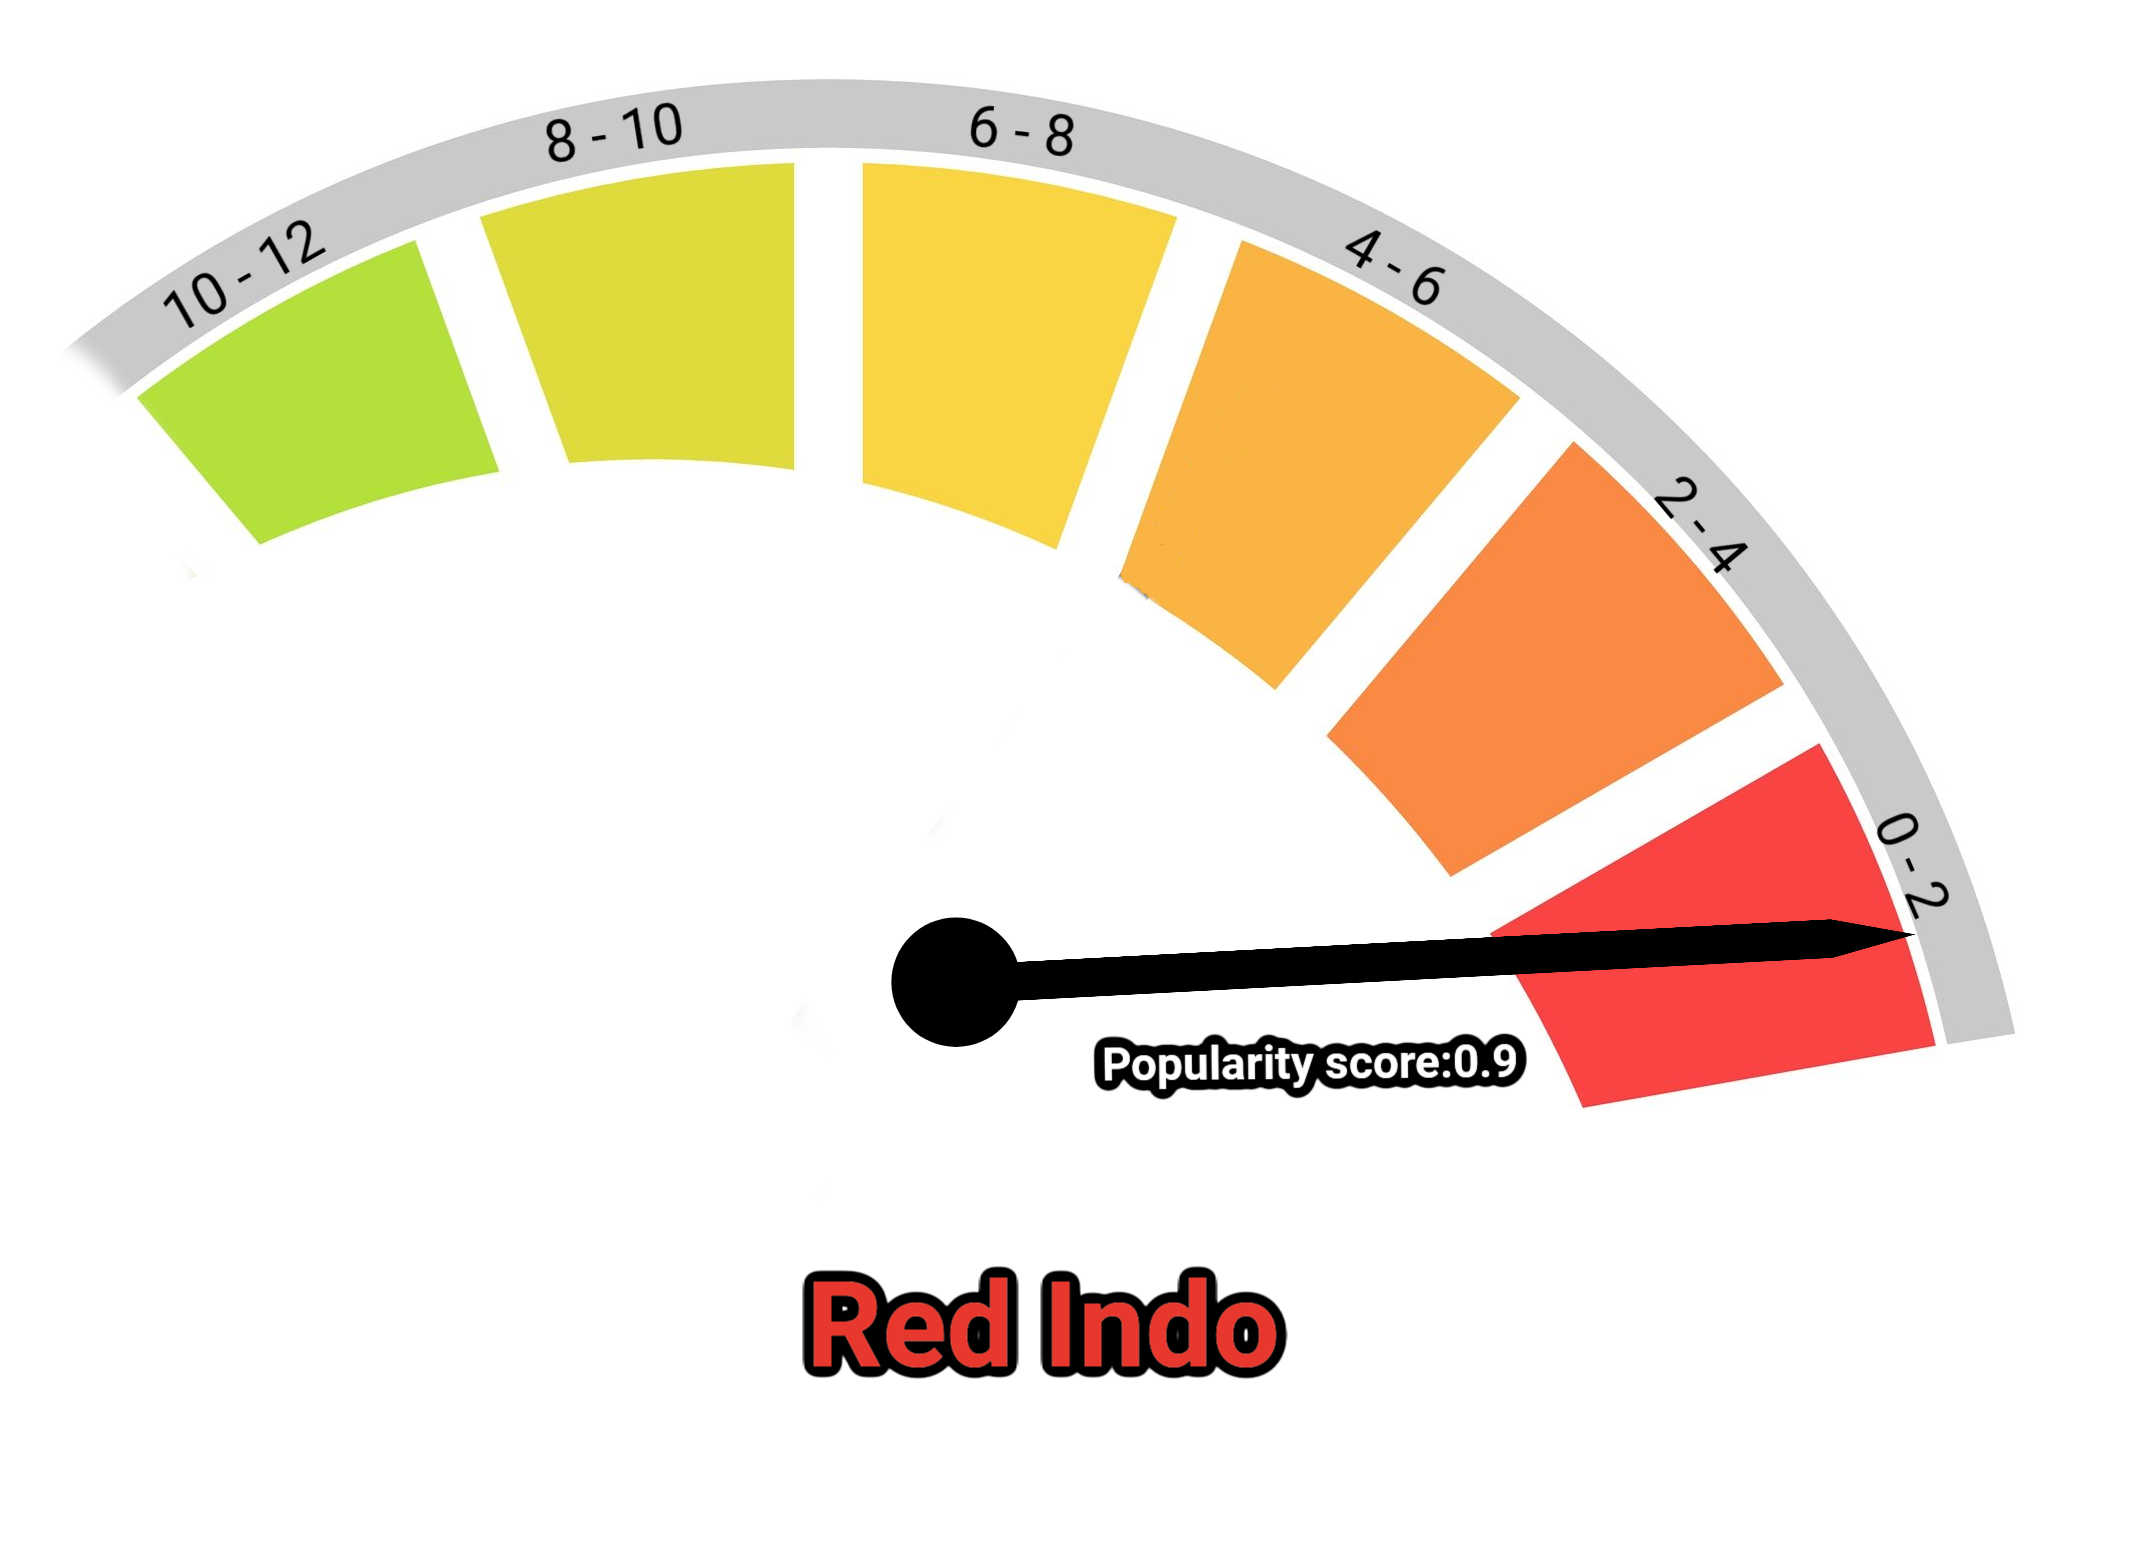 image of red indo kratom popularity score